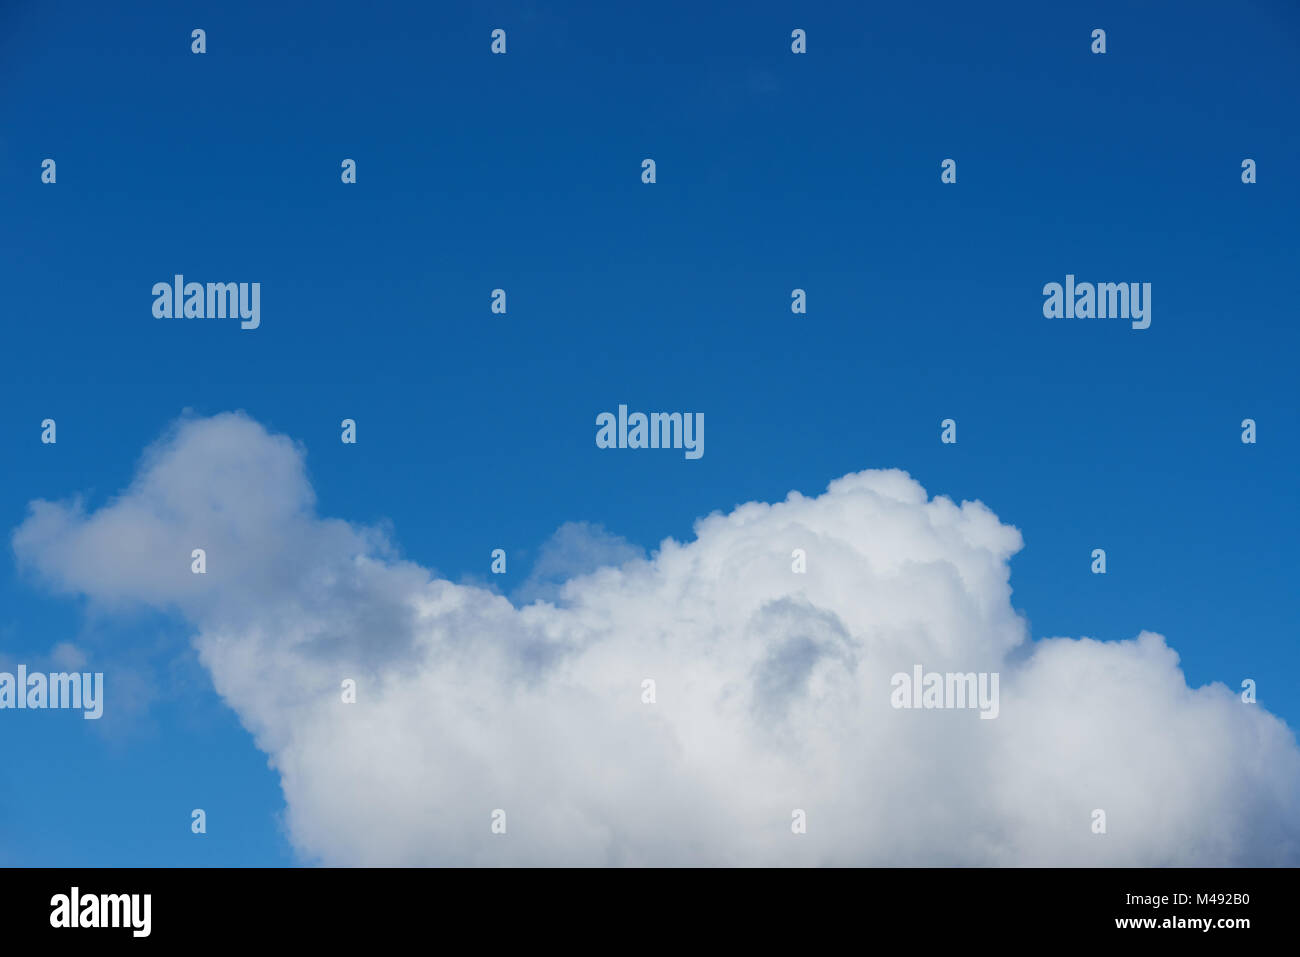 Nuvola Bianca con copyspace sul cielo blu sullo sfondo. Una grande nuvola grigio Foto Stock